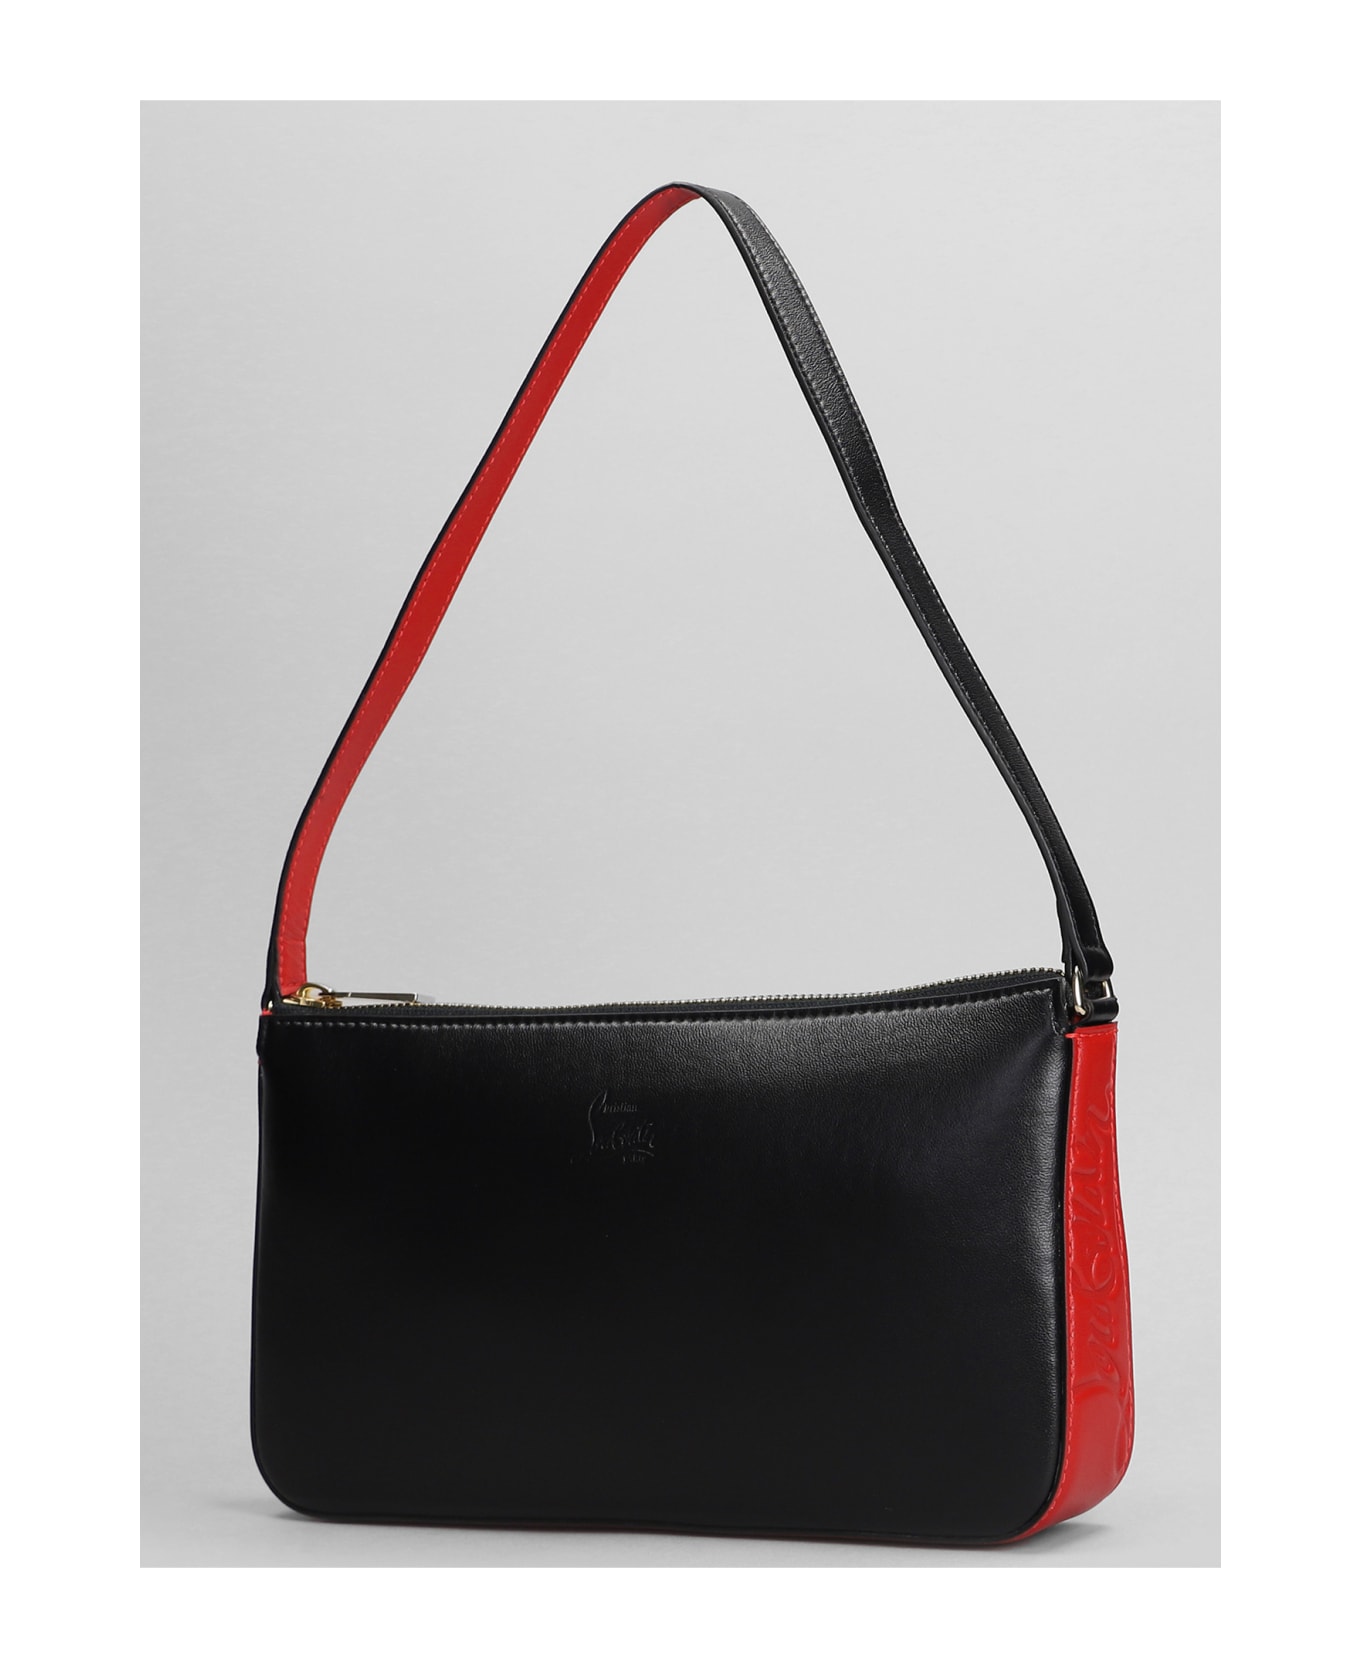 Christian Louboutin Loubila Shoulder Bag - Black/red